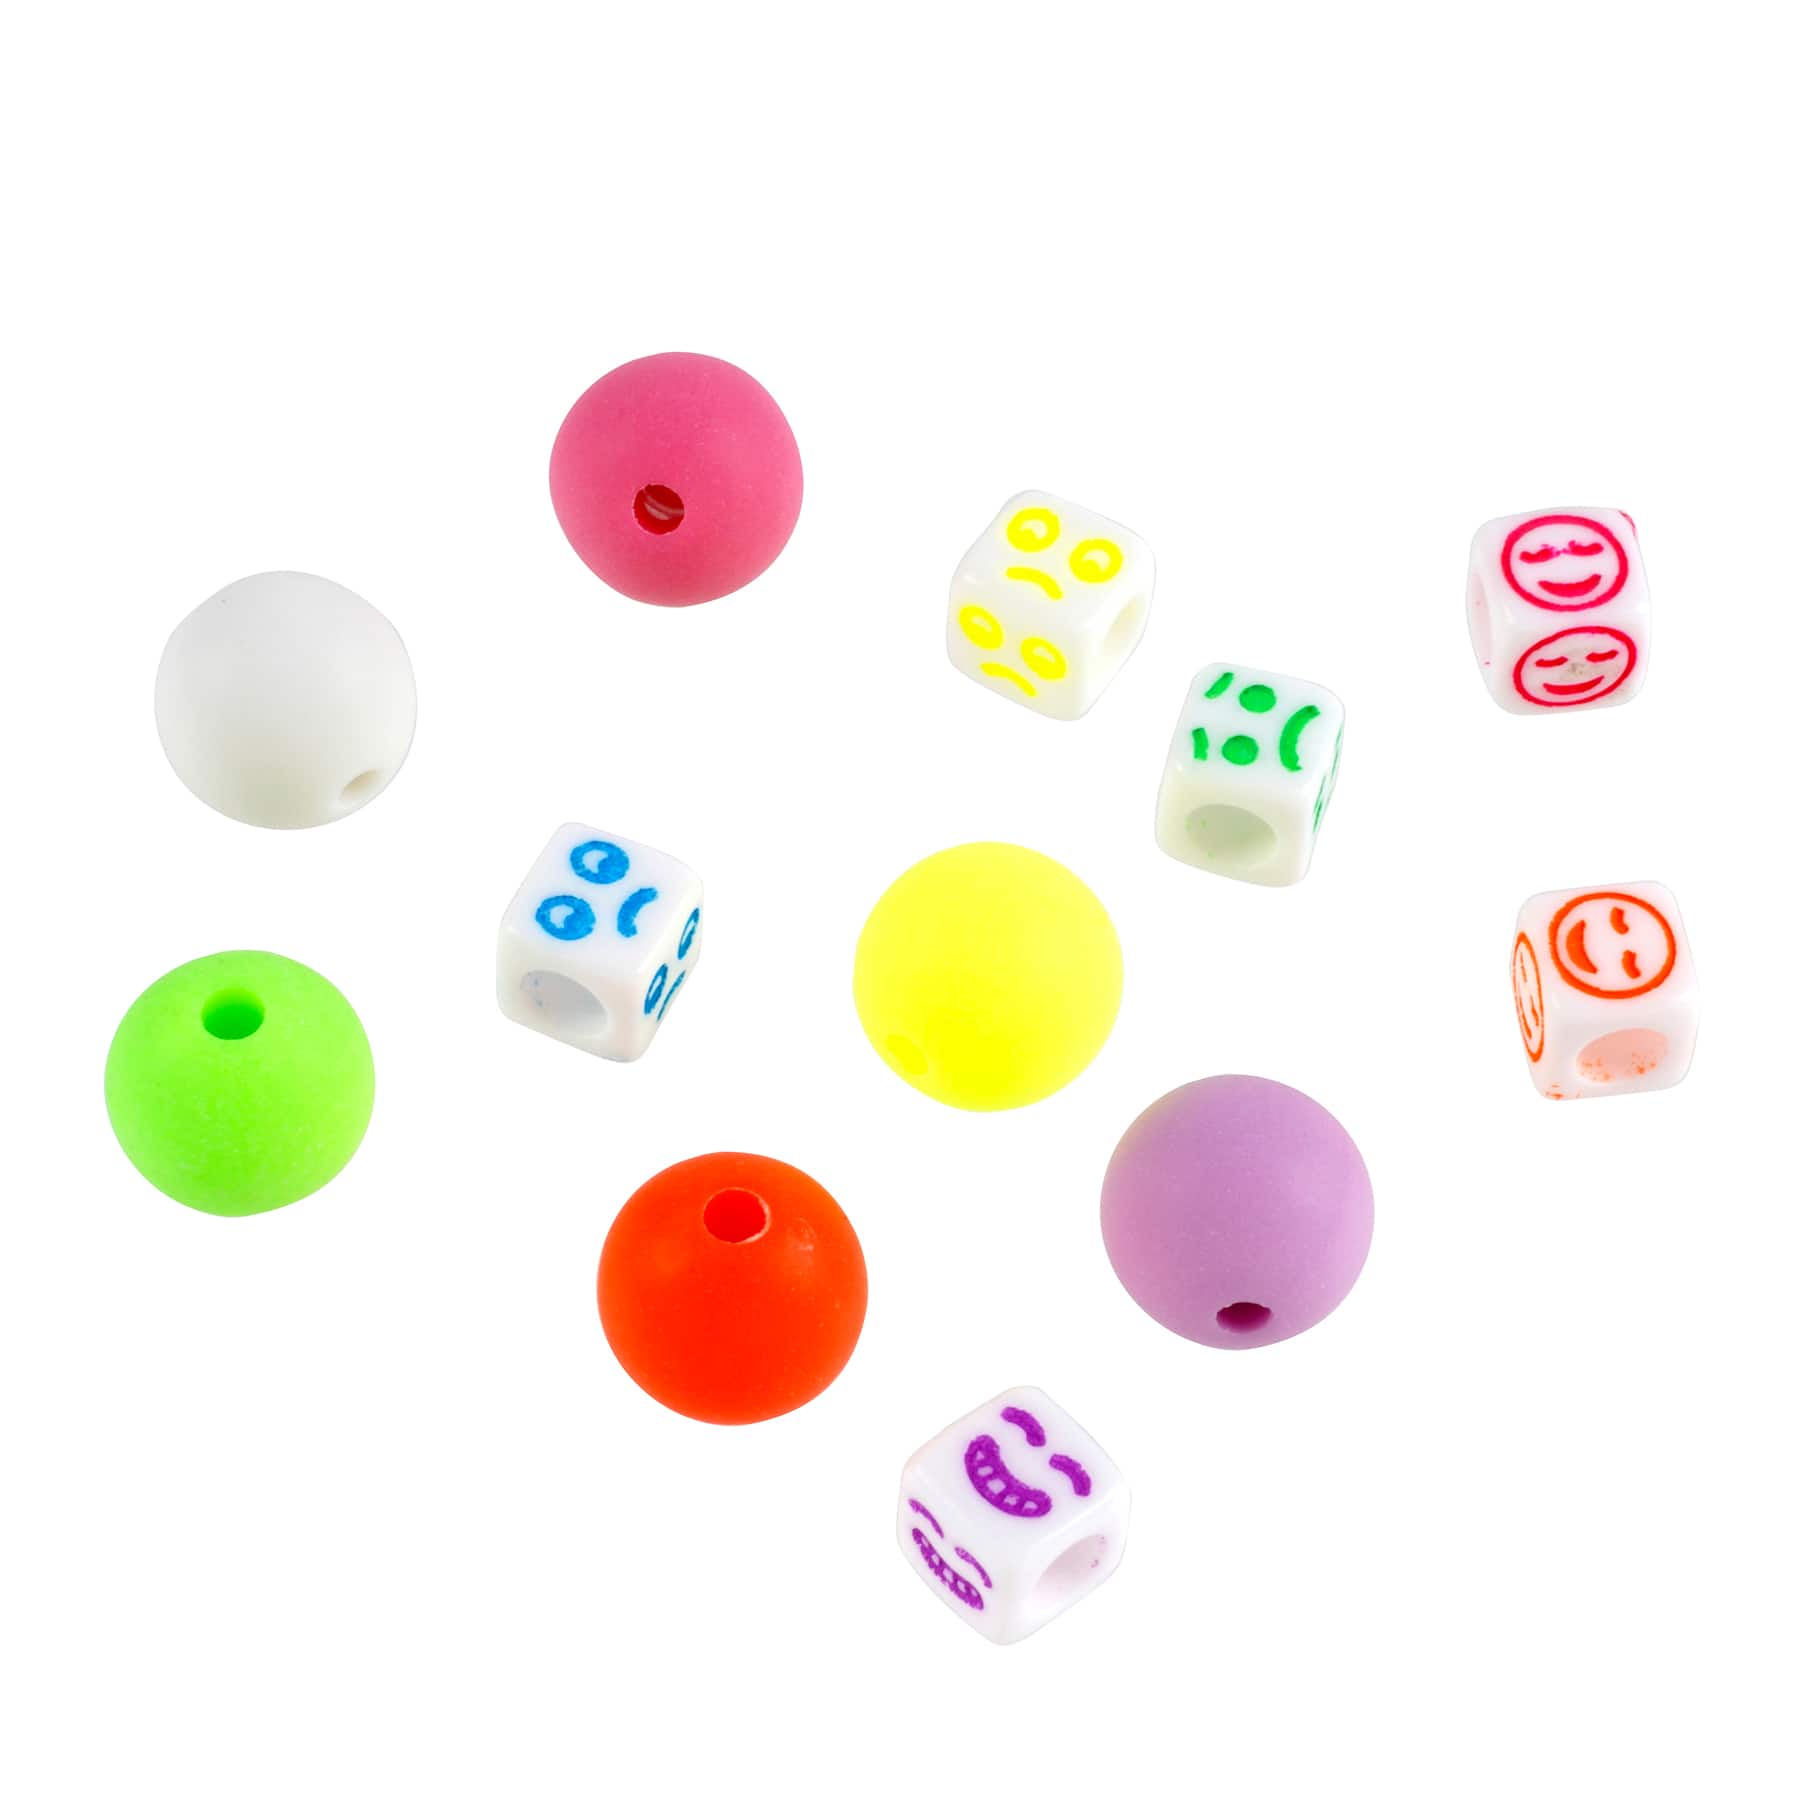 12 Packs: 170 ct. (2,040 total) Neon Emoji Bead Mix by Creatology&#x2122;